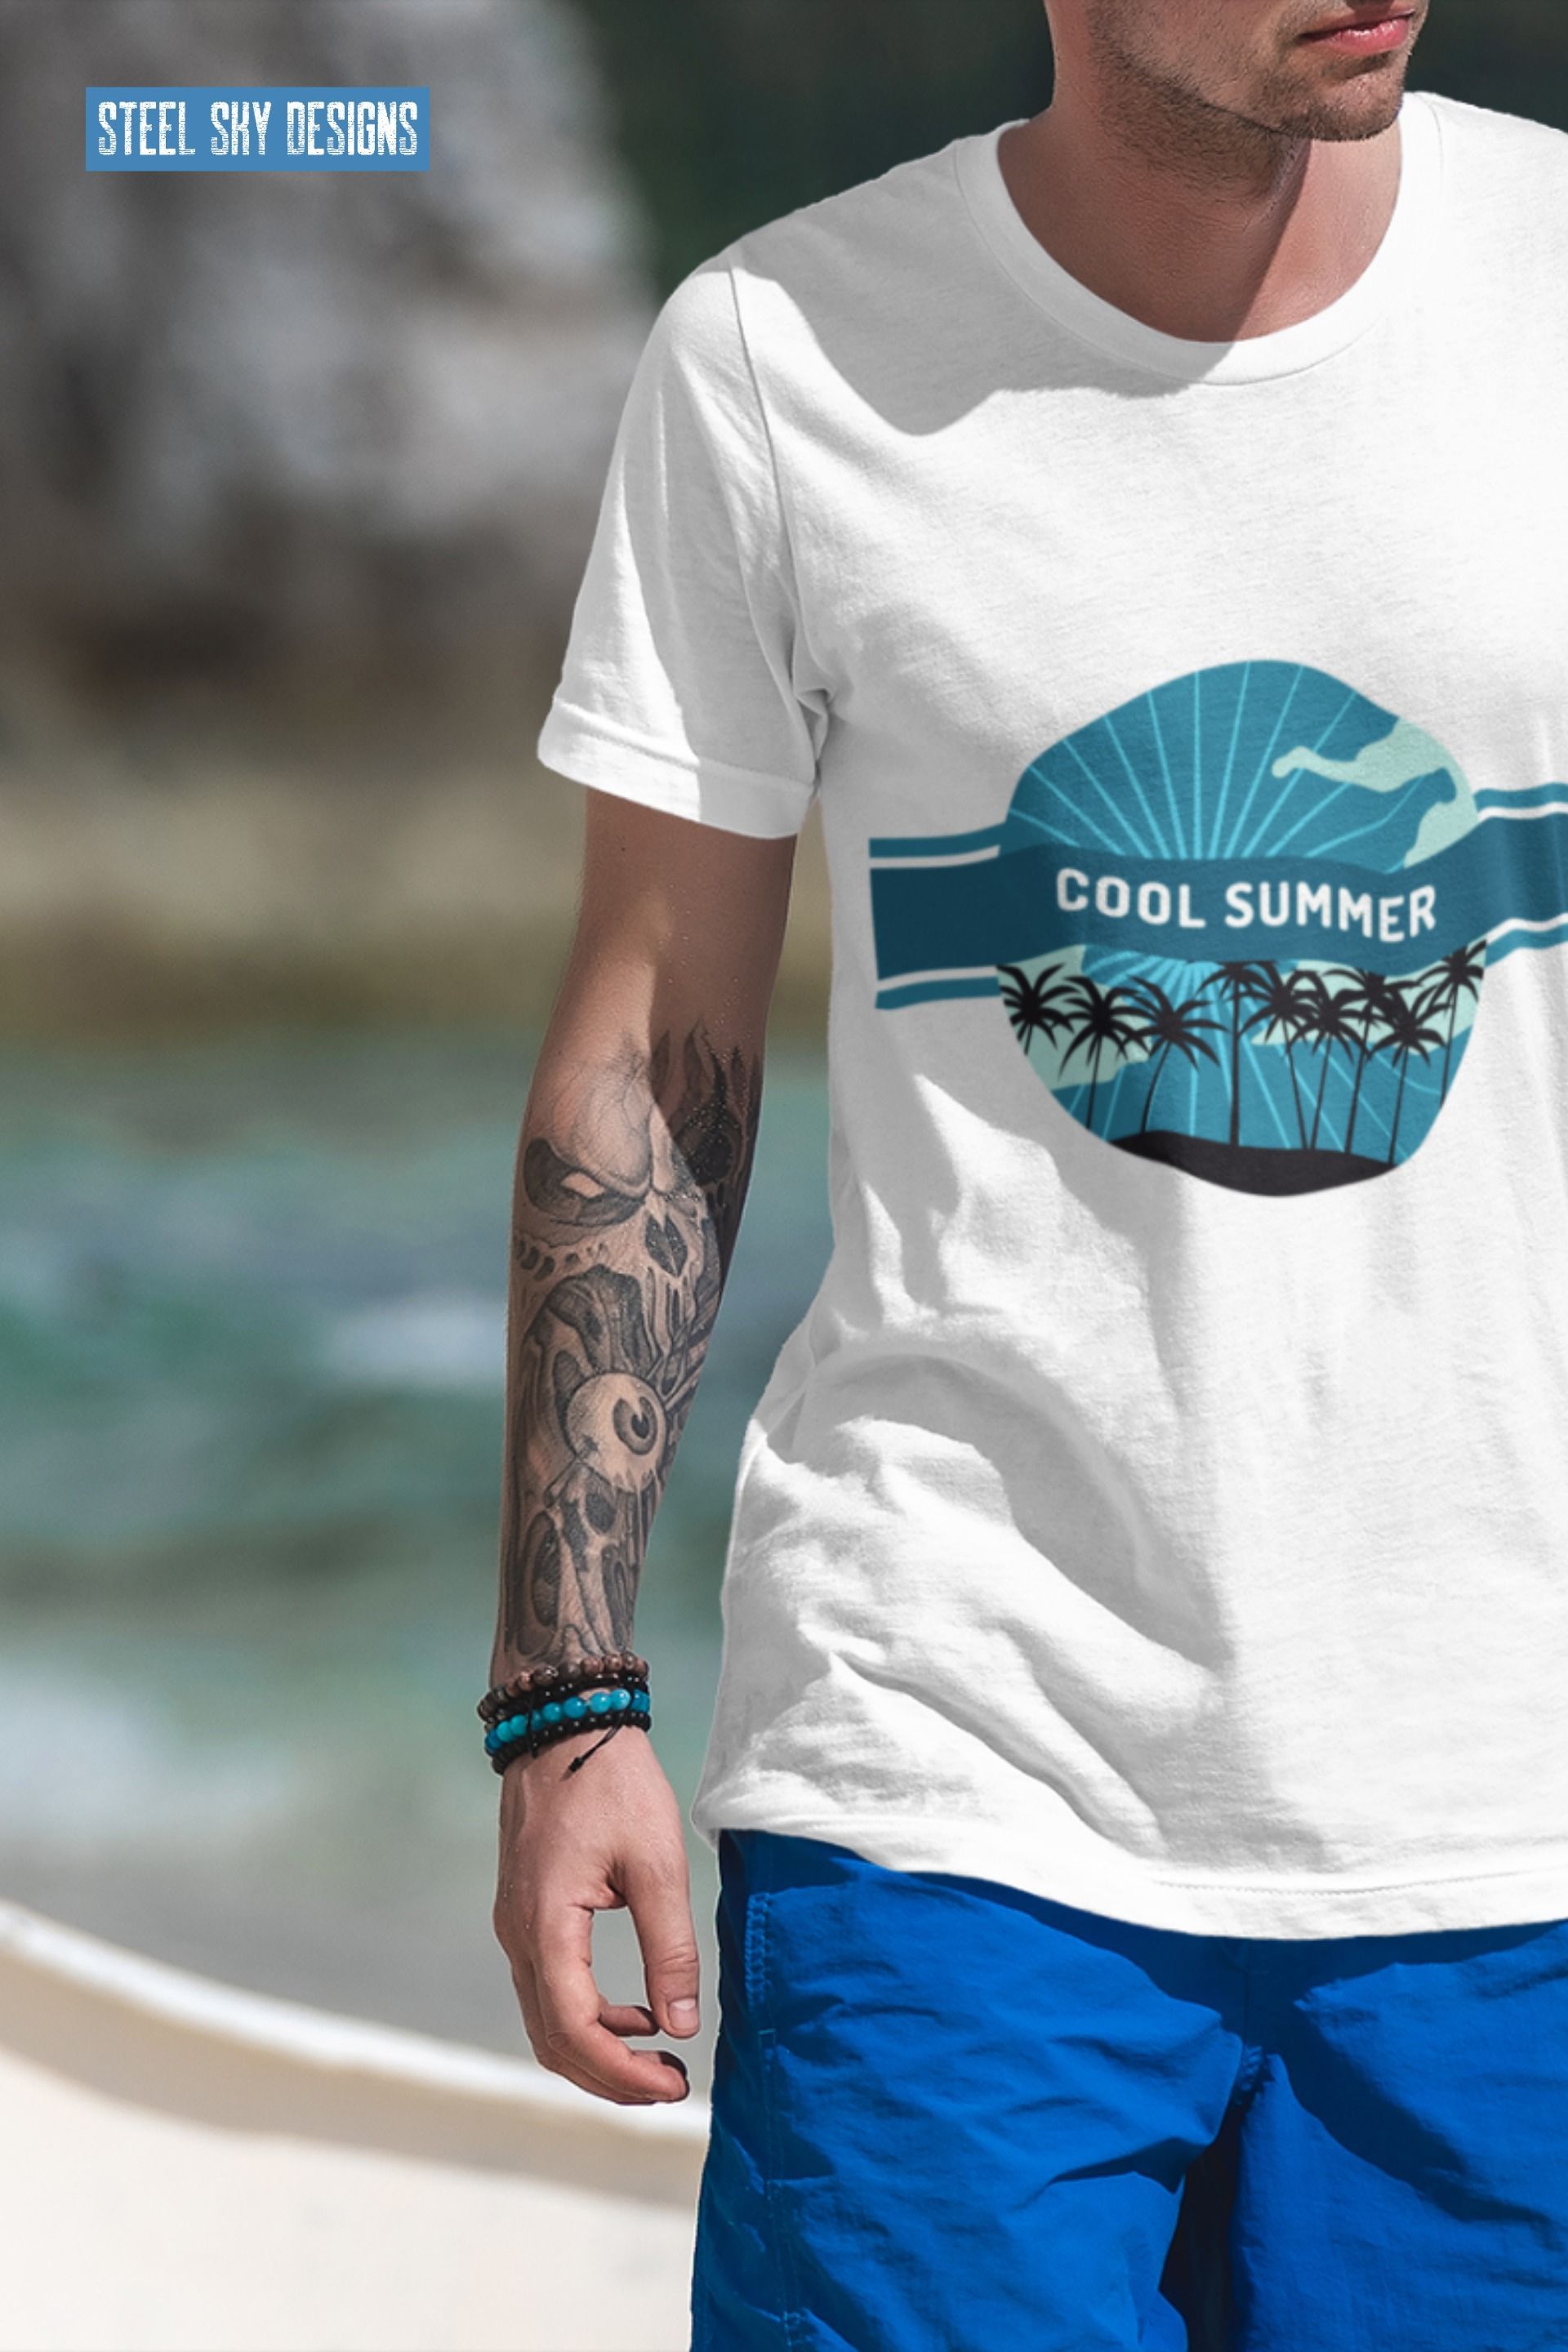 Cool Summer Men's T-shirt - Cool Summer Men's T-shirt -   19 summer fitness Design ideas